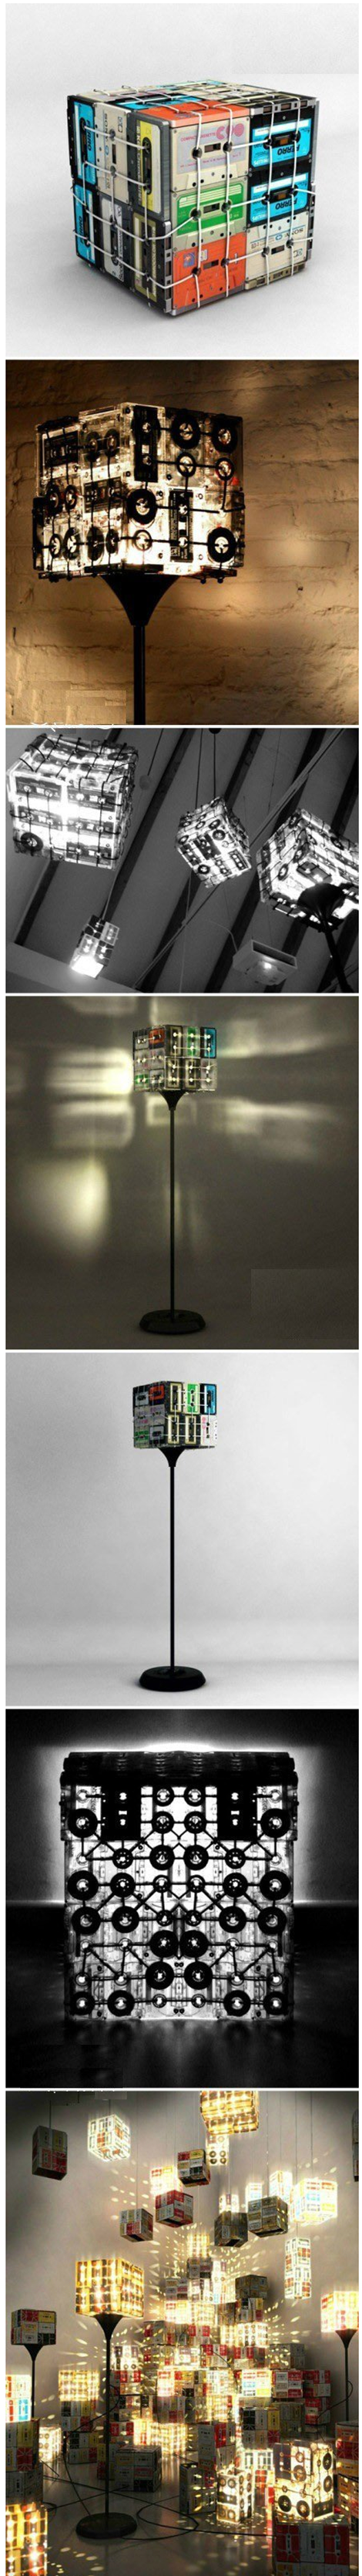 Great Tapes Lamp | DIY & Crafts Tutorials